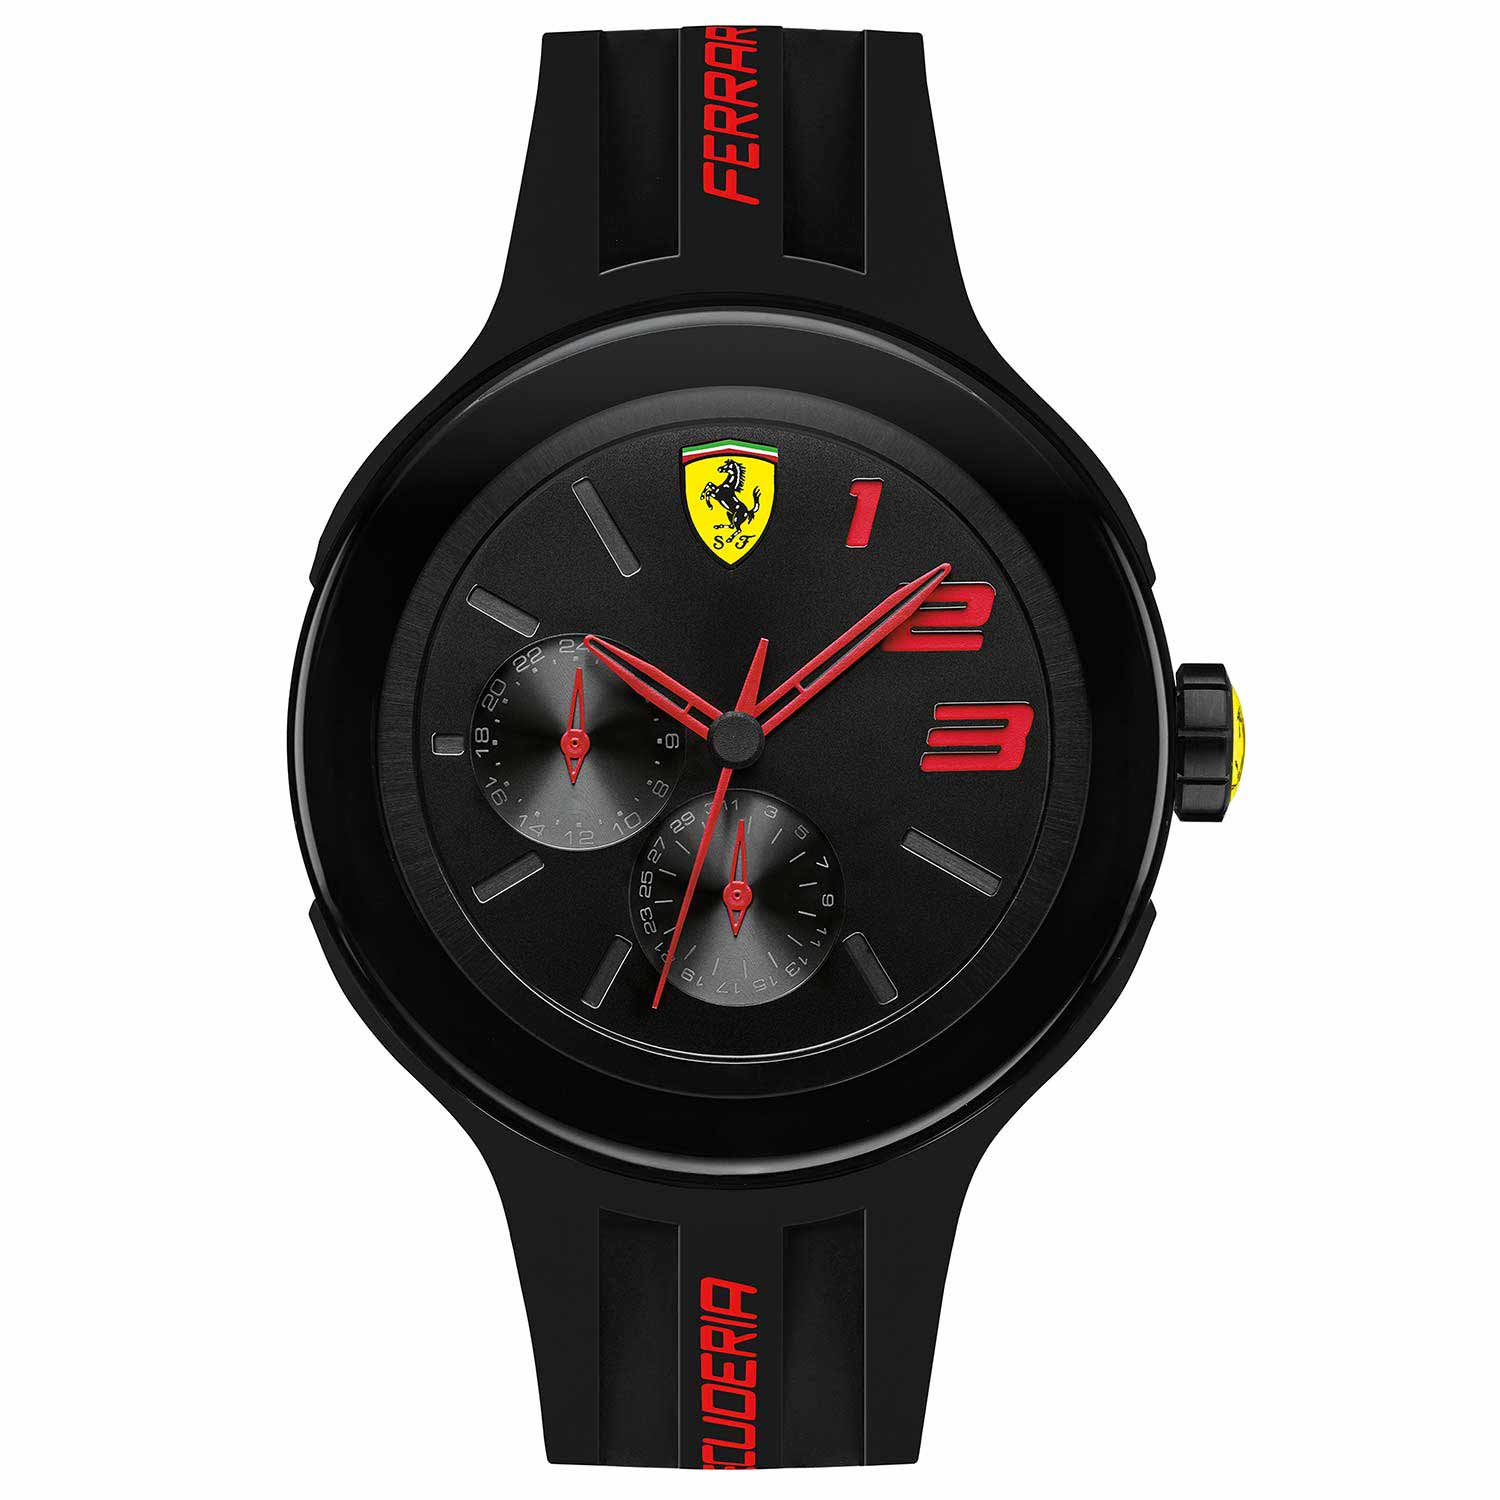 Reloj deportivo de hombre Scuderia Ferrari multifunción negro